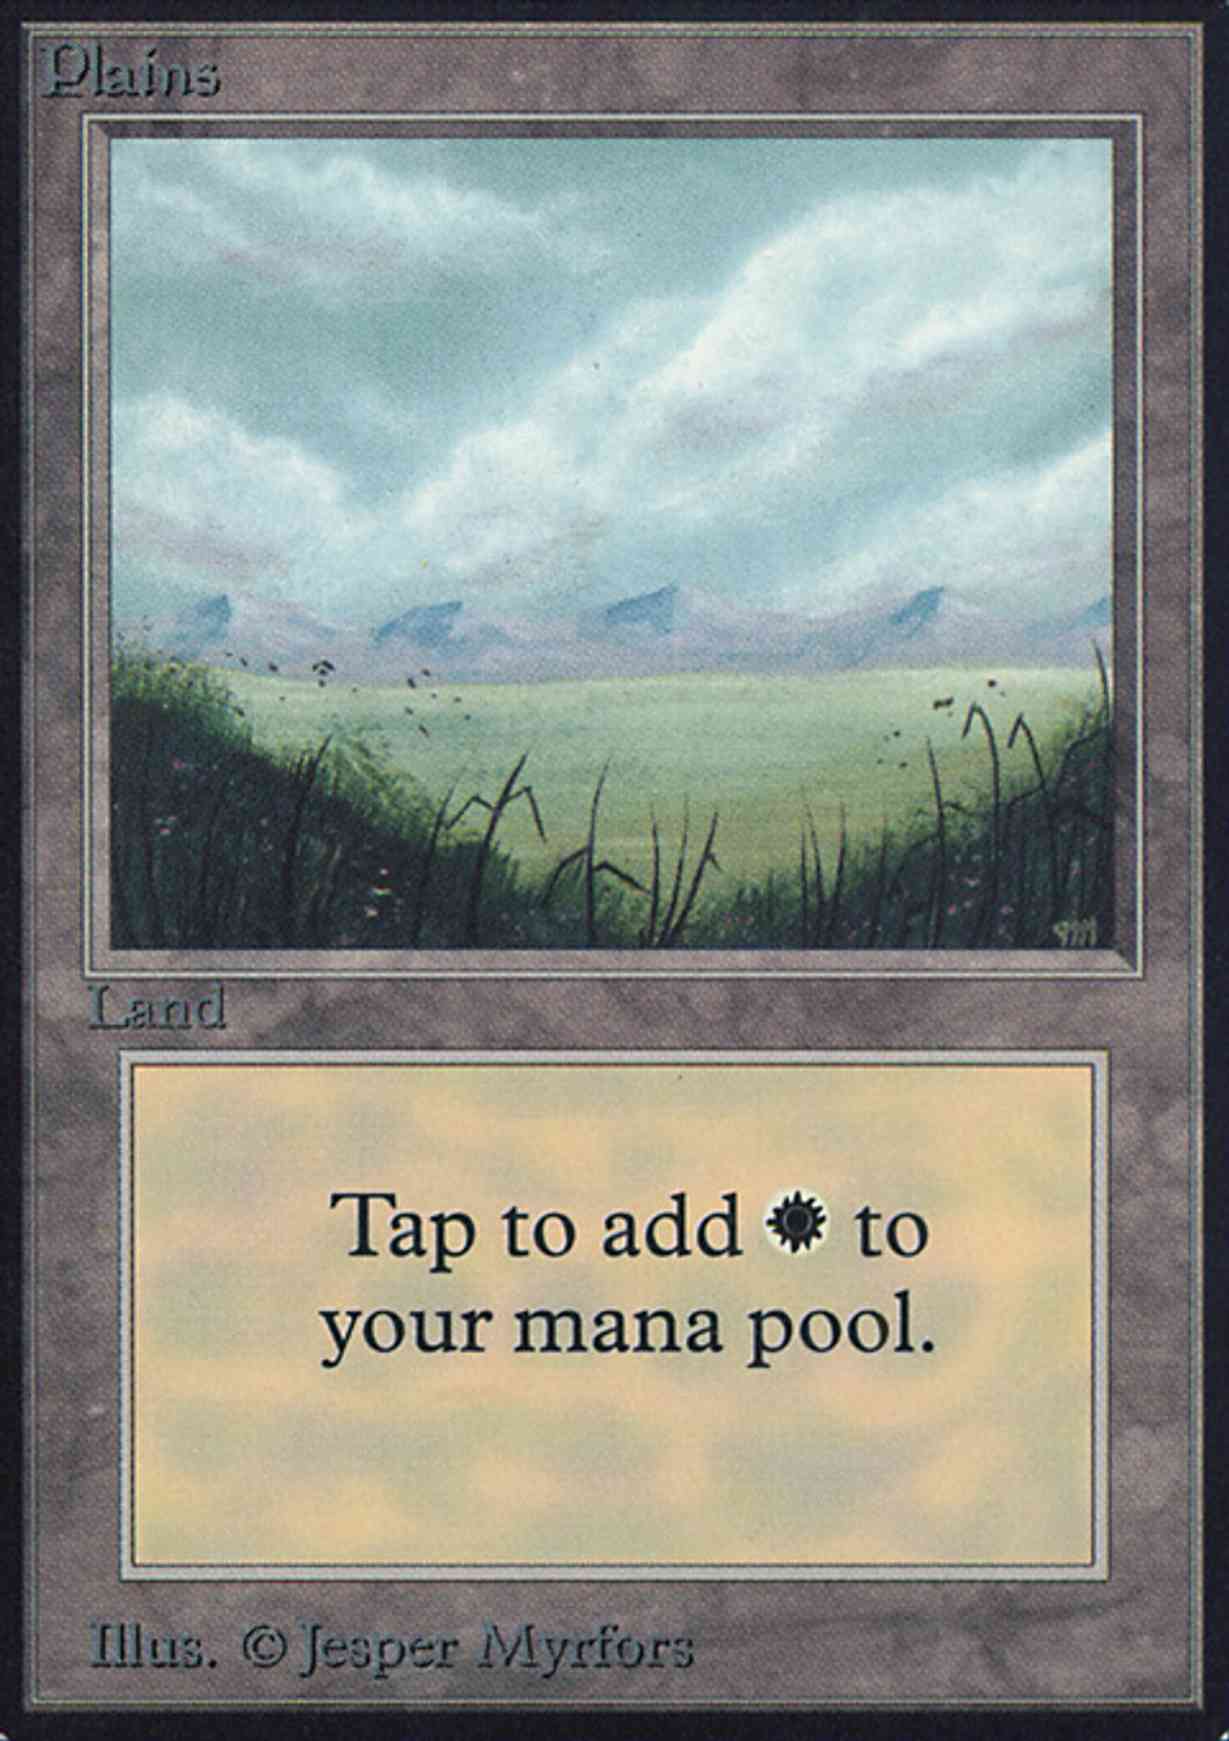 Plains (A) magic card front